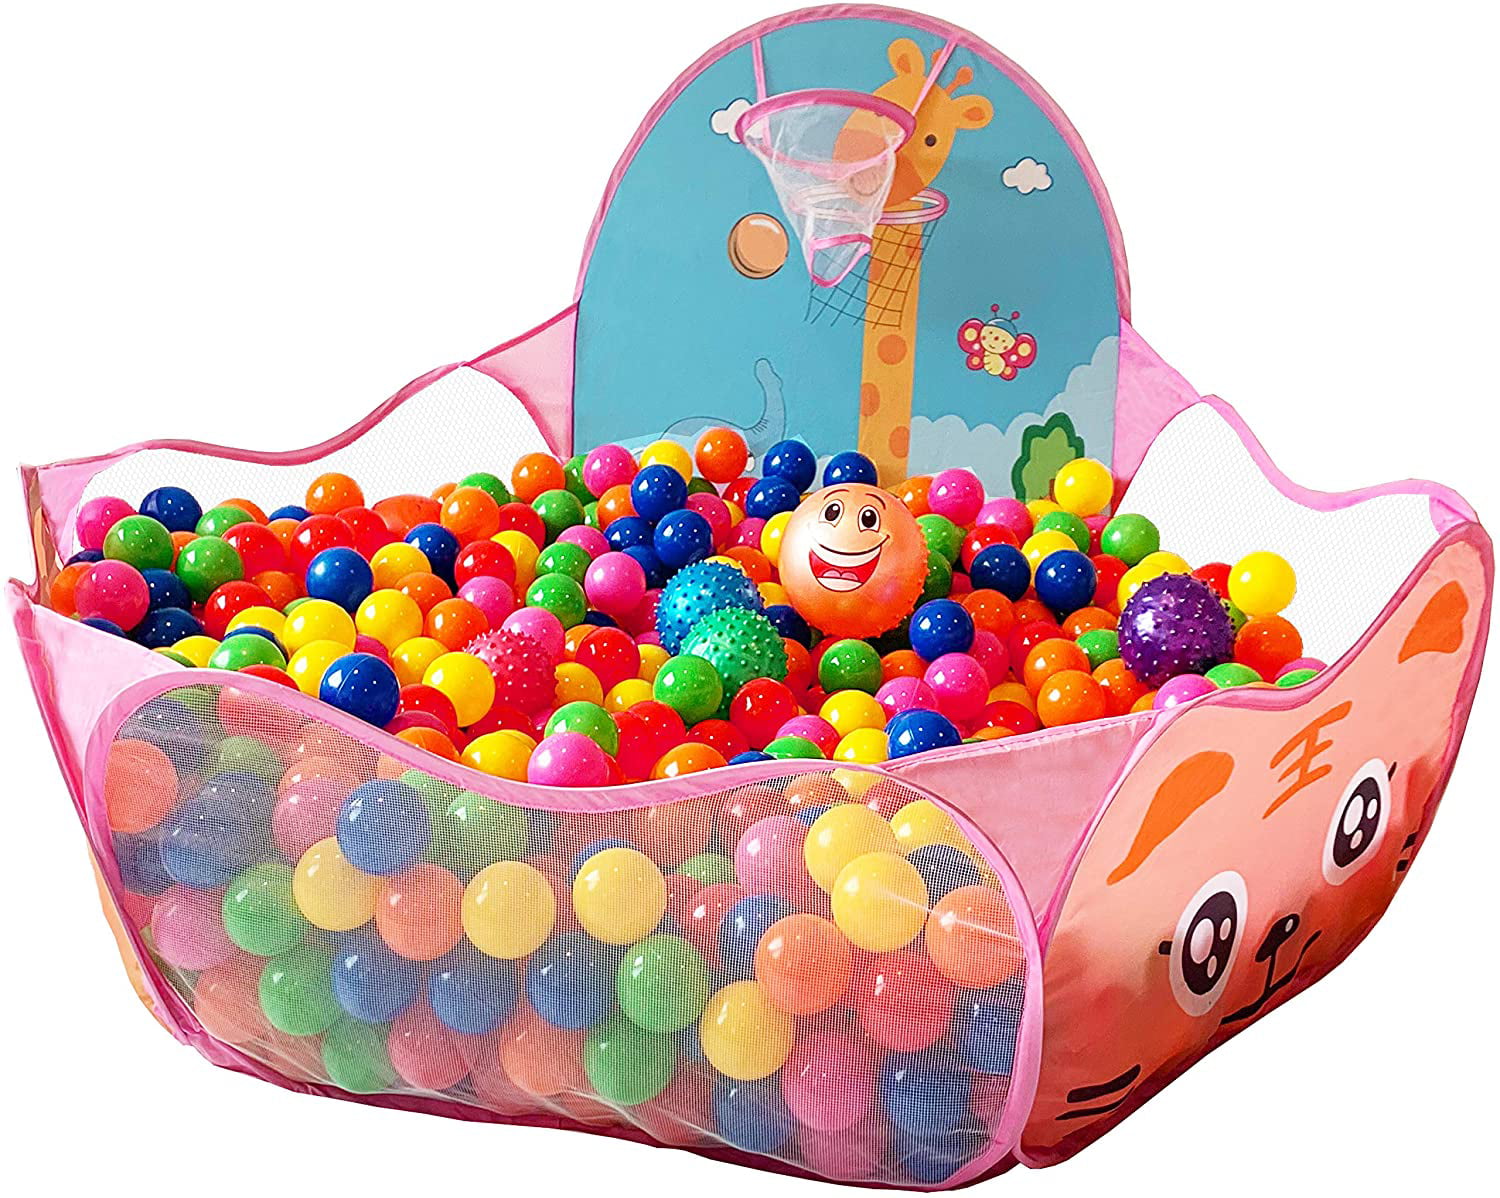 L EocuSun Kids Ball Pit Tent-Toddler Ball Pit Playpen with Zippered Storage Bag 